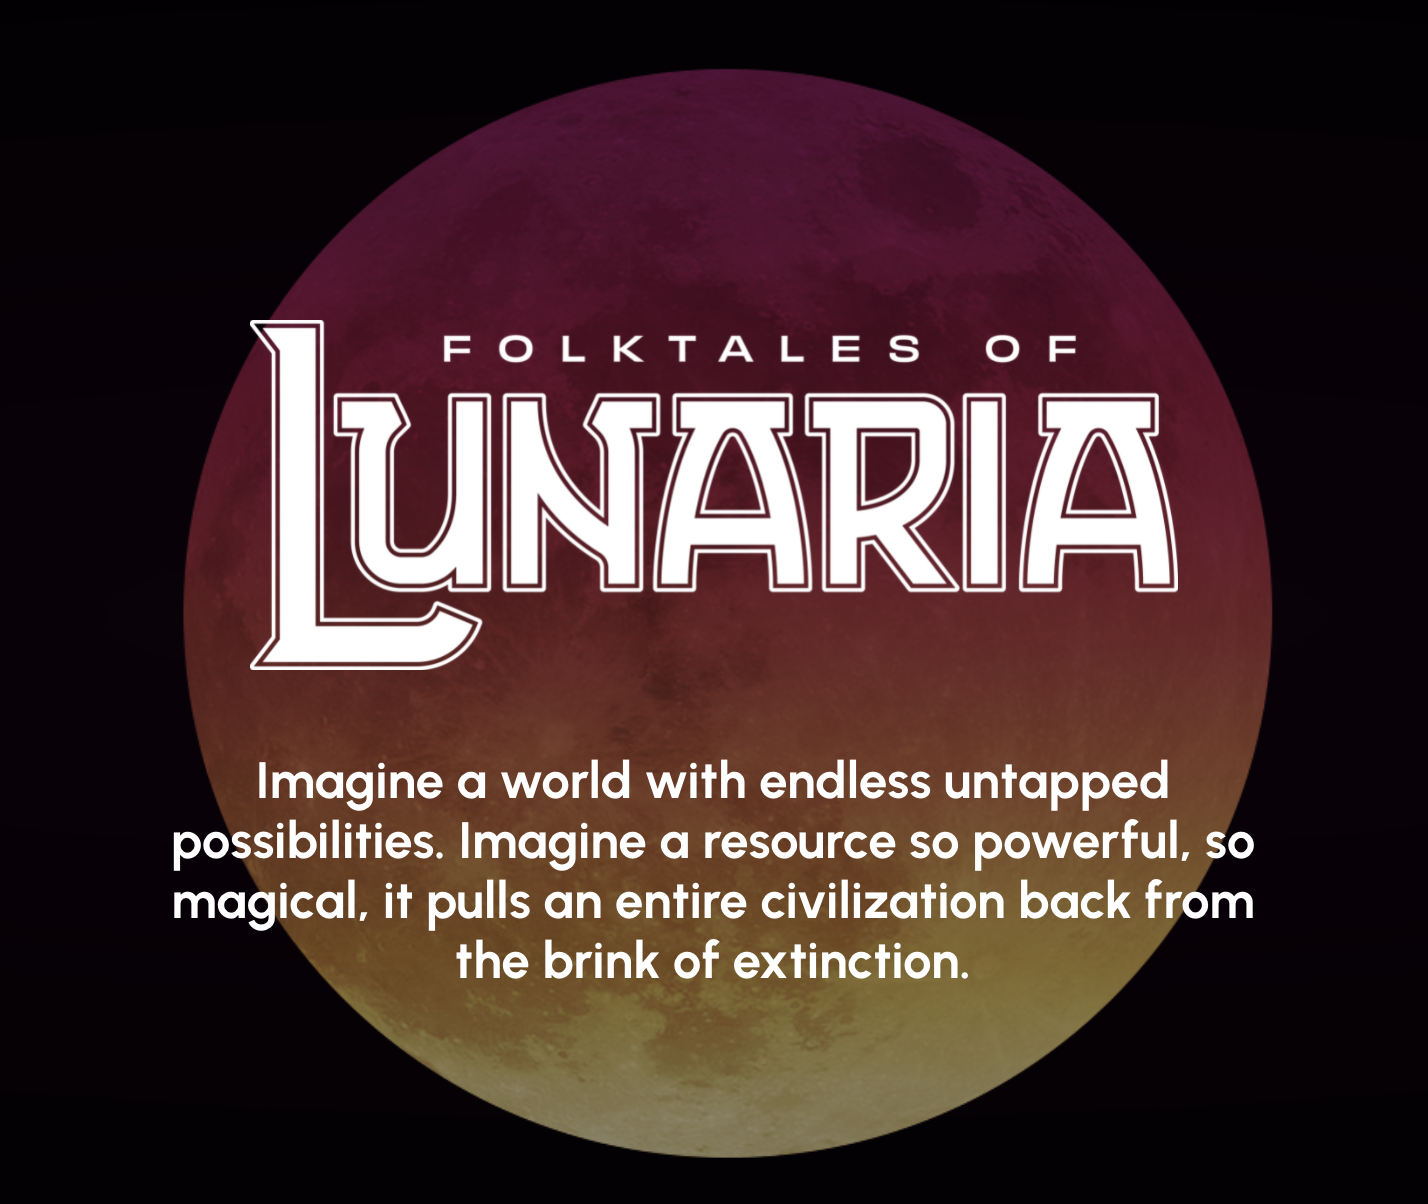 Lunaria logo with subtitle